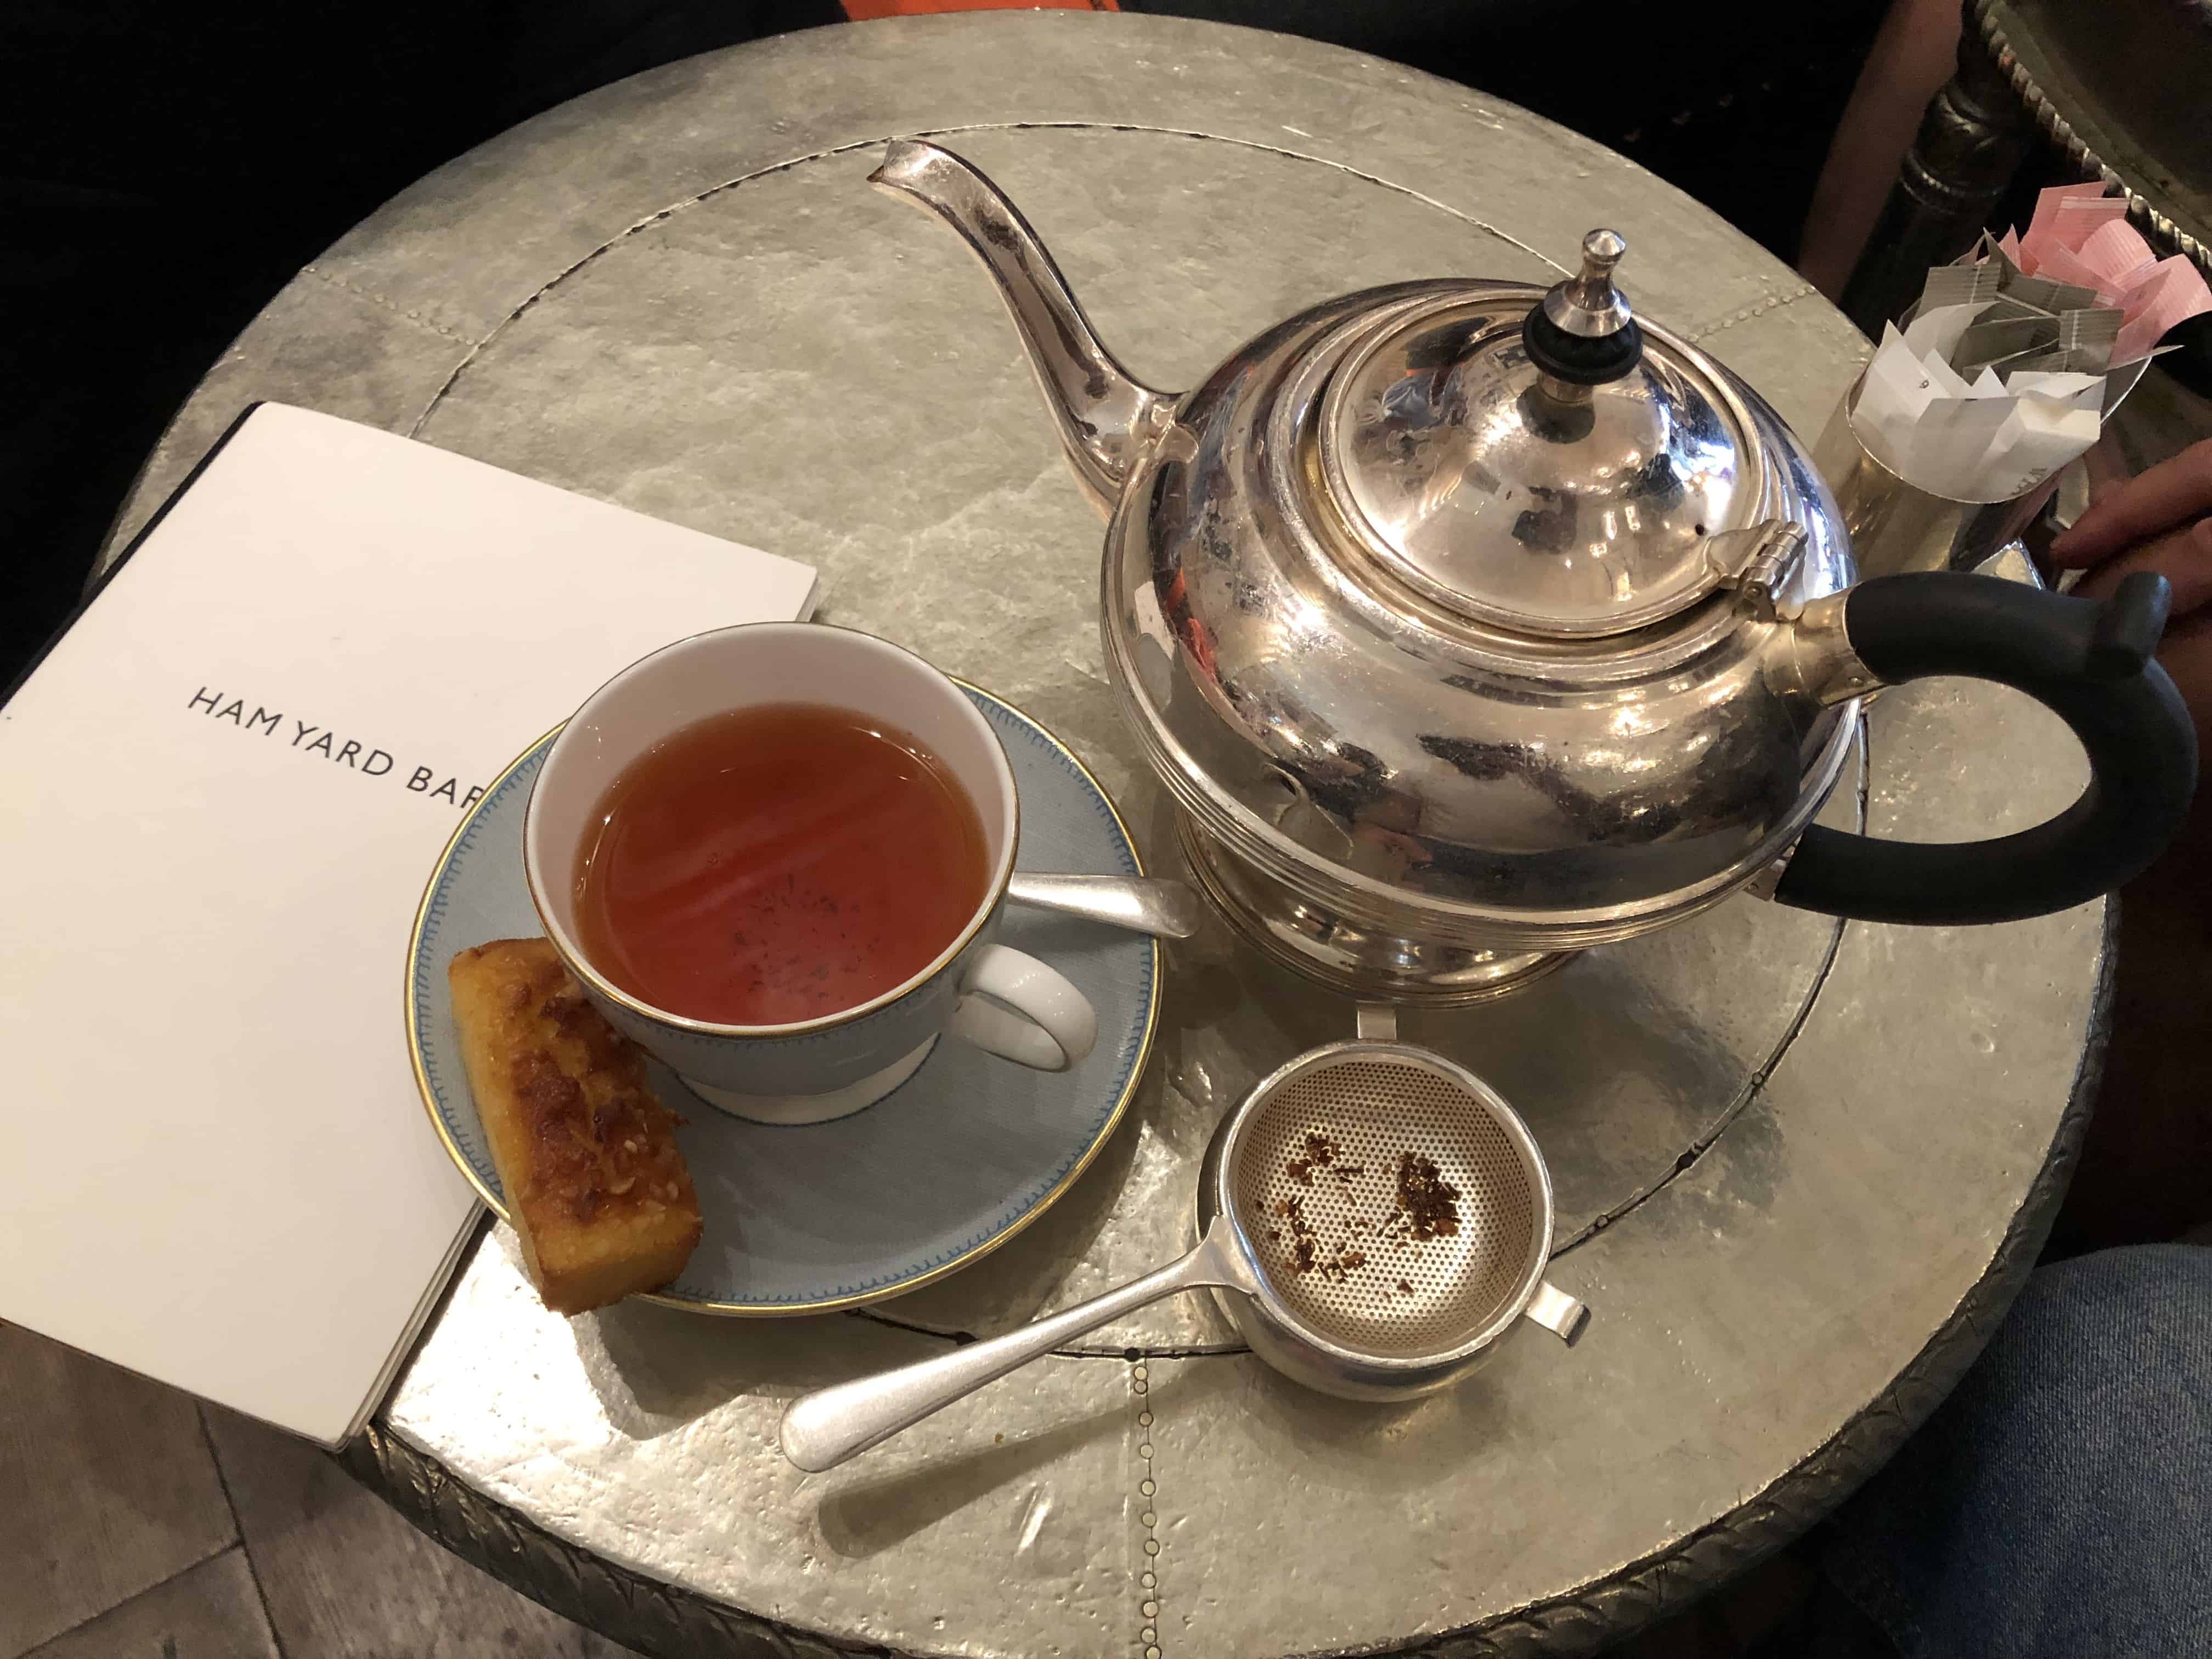 Tea at Ham Yard Bar & Restaurant in London, England